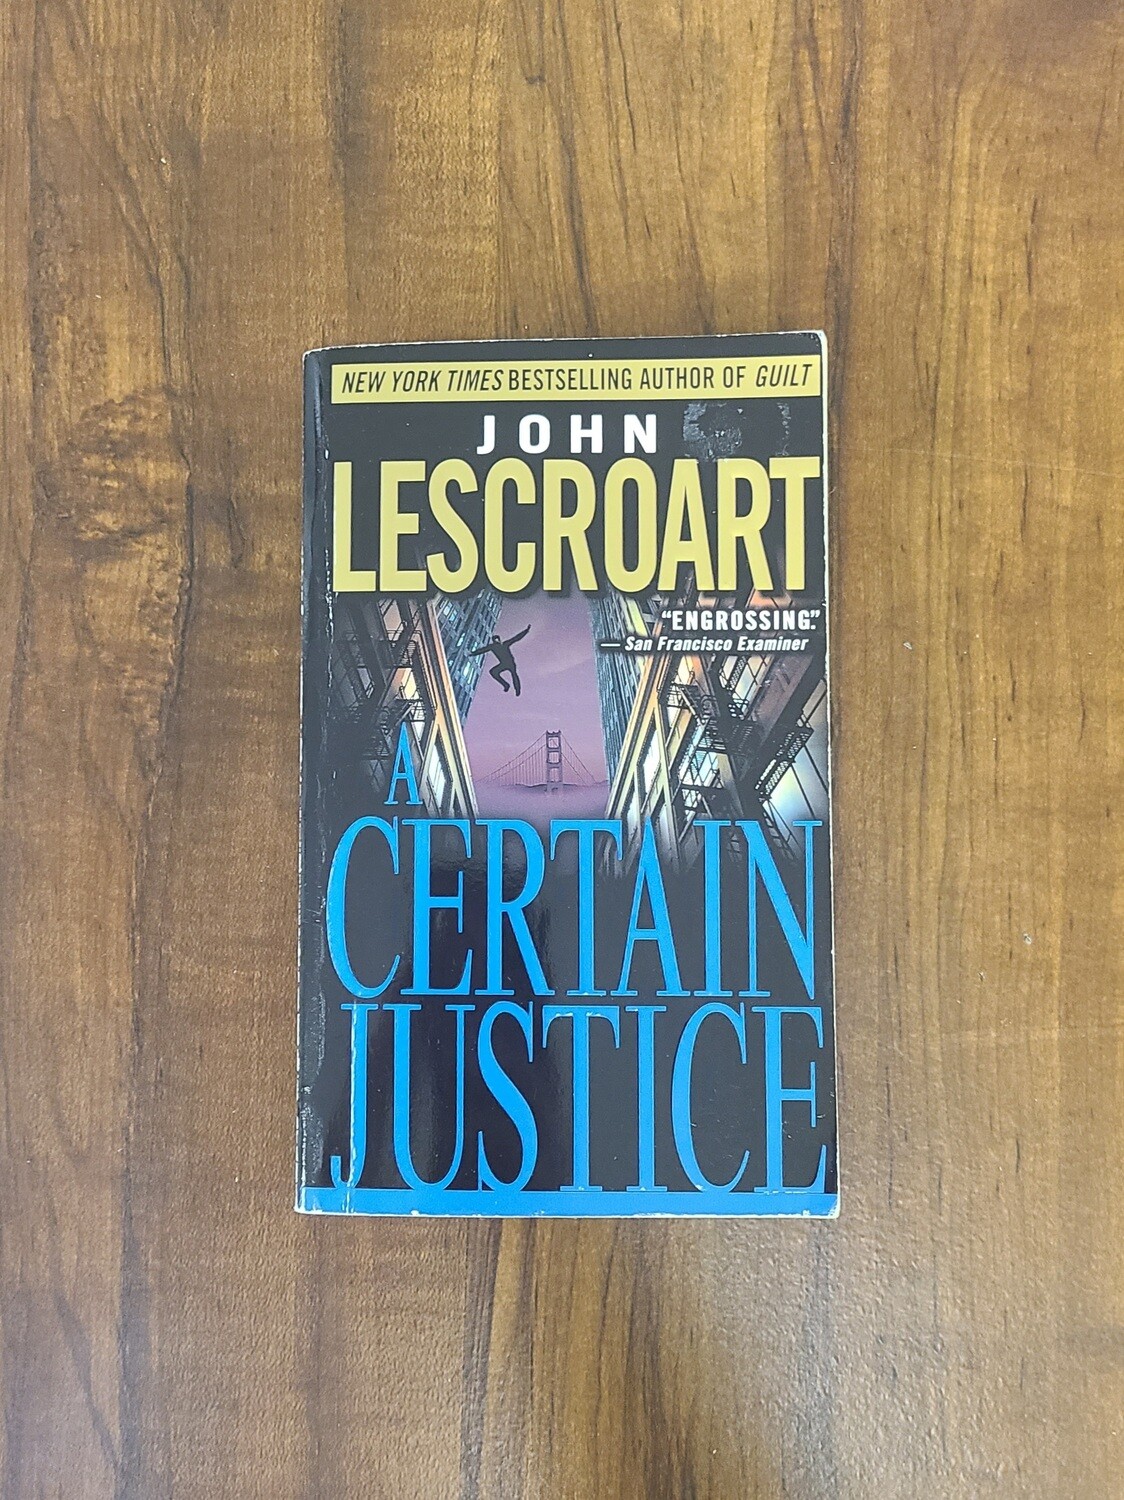 A Certain Justice by John Lescroart